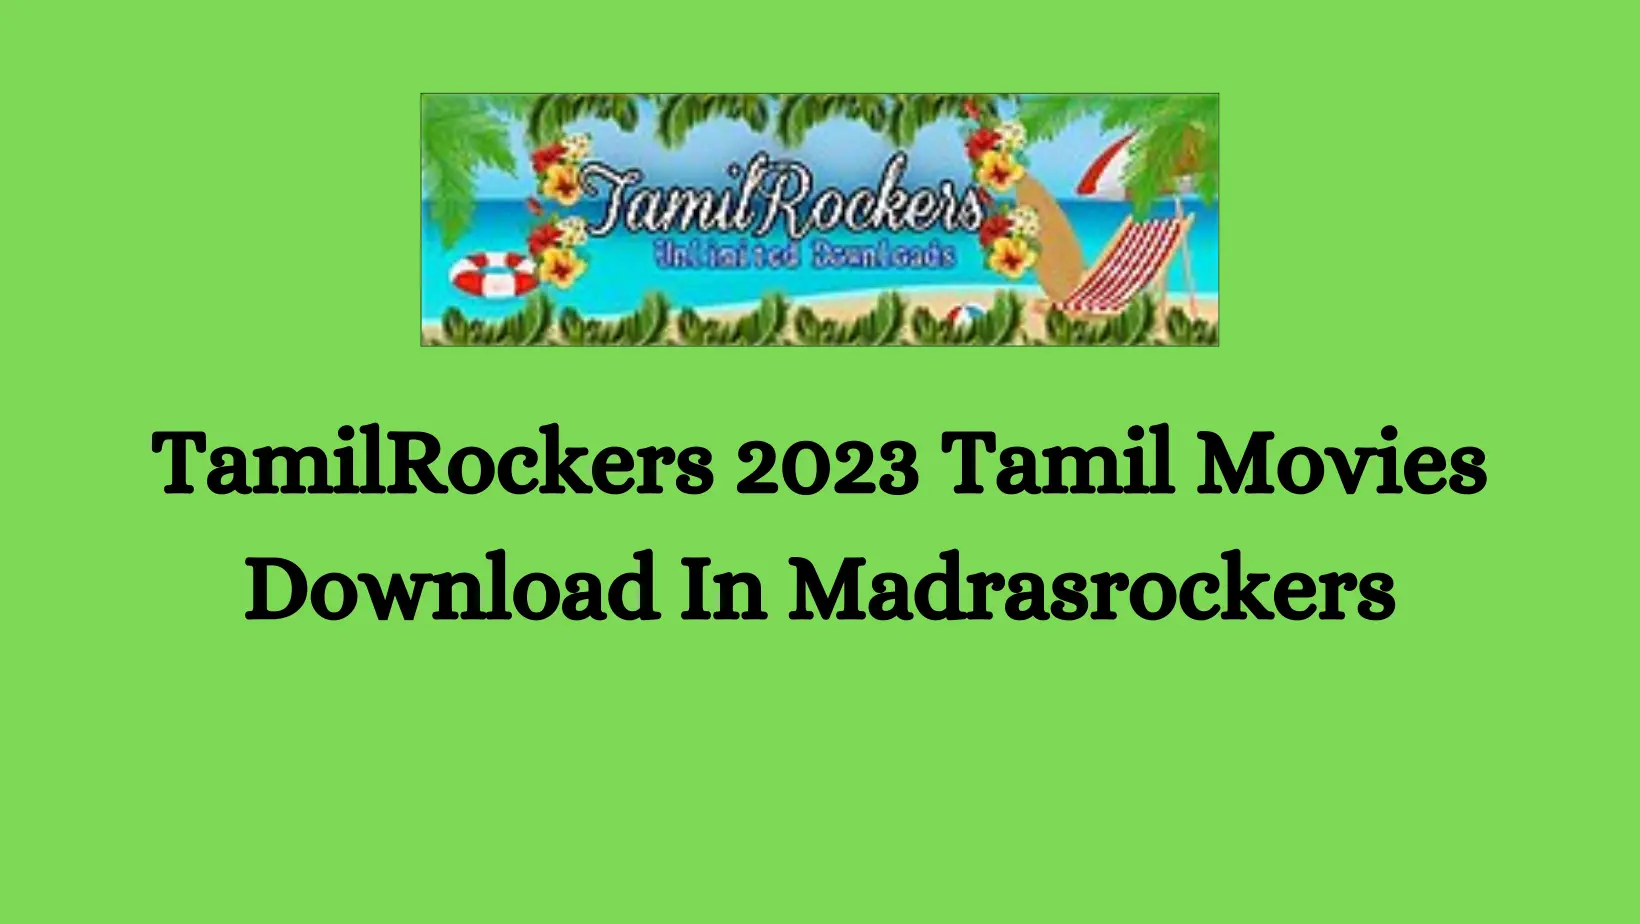 TamilRockers 2023 Tamil Movies Download In Madrasrockers